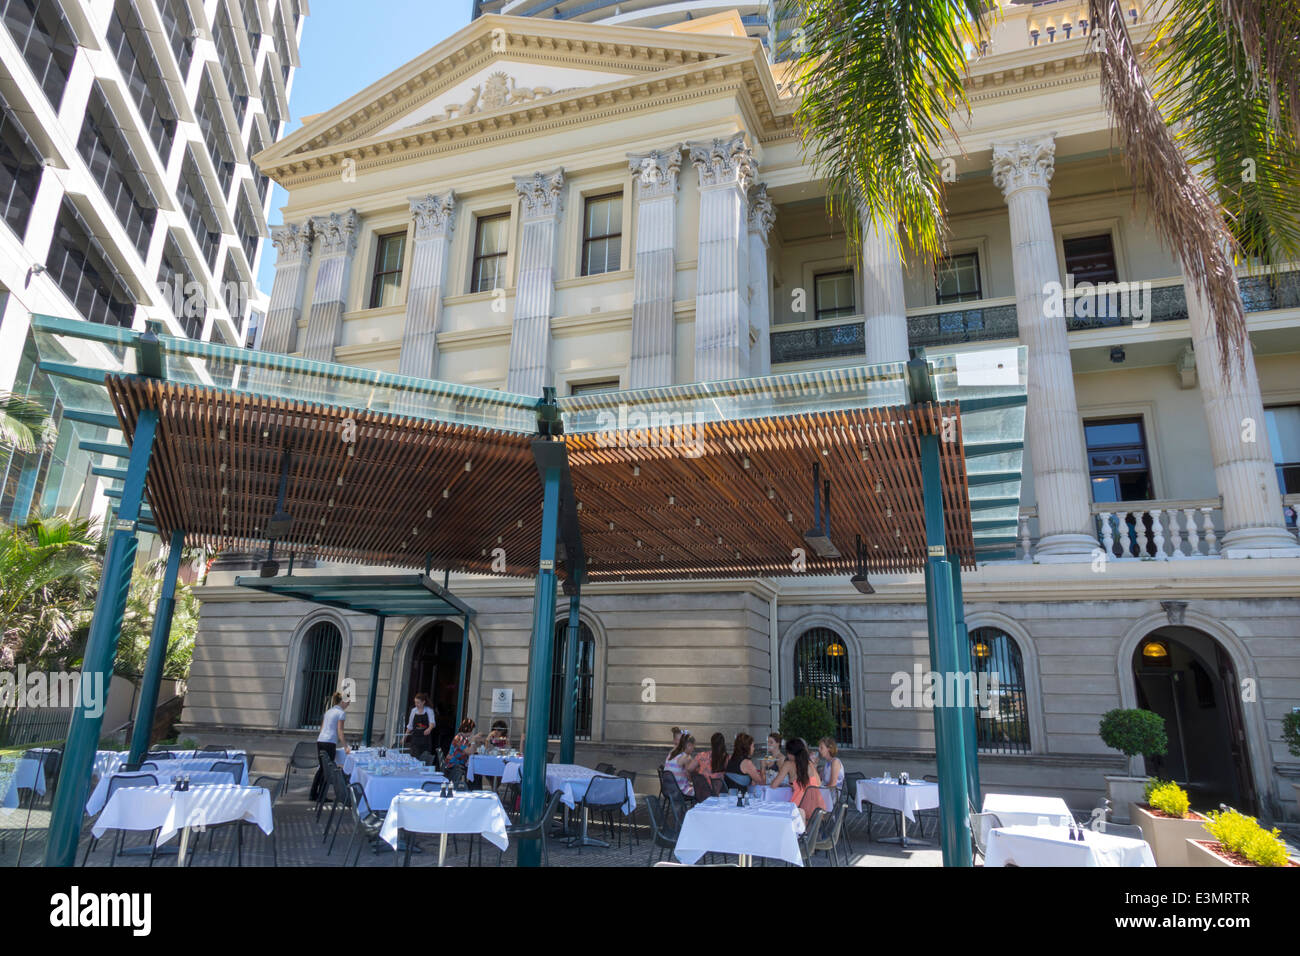 Brisbane Australia,Queen Street,Customs House,building,restaurant restaurants food dining cafe cafes,al fresco sidewalk outside tables,tables,AU140316 Stock Photo